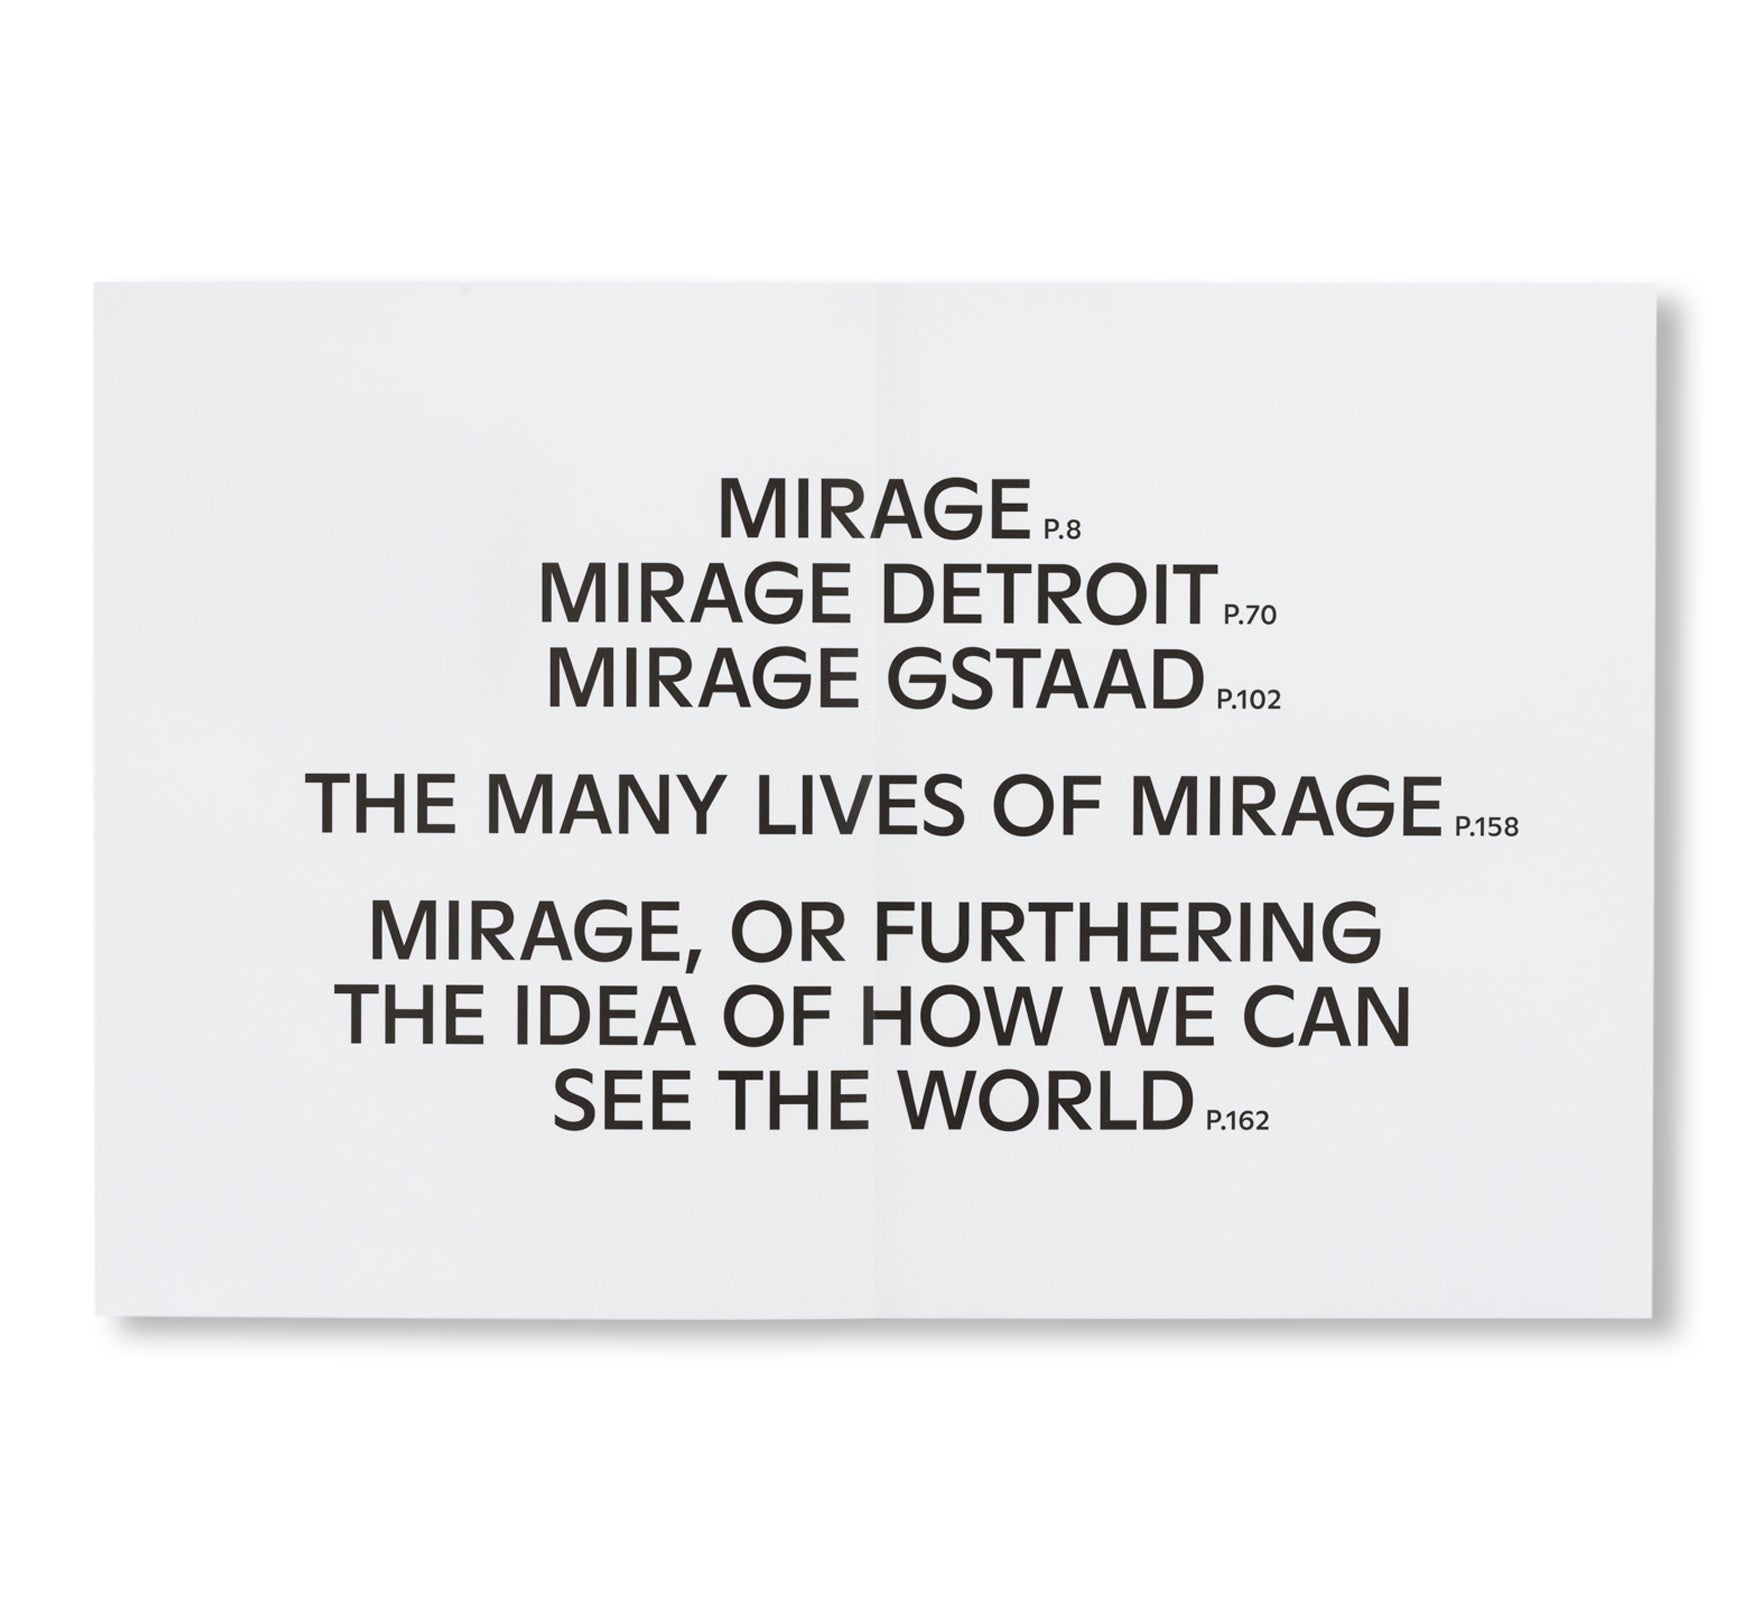 MIRAGE by Doug Aitken